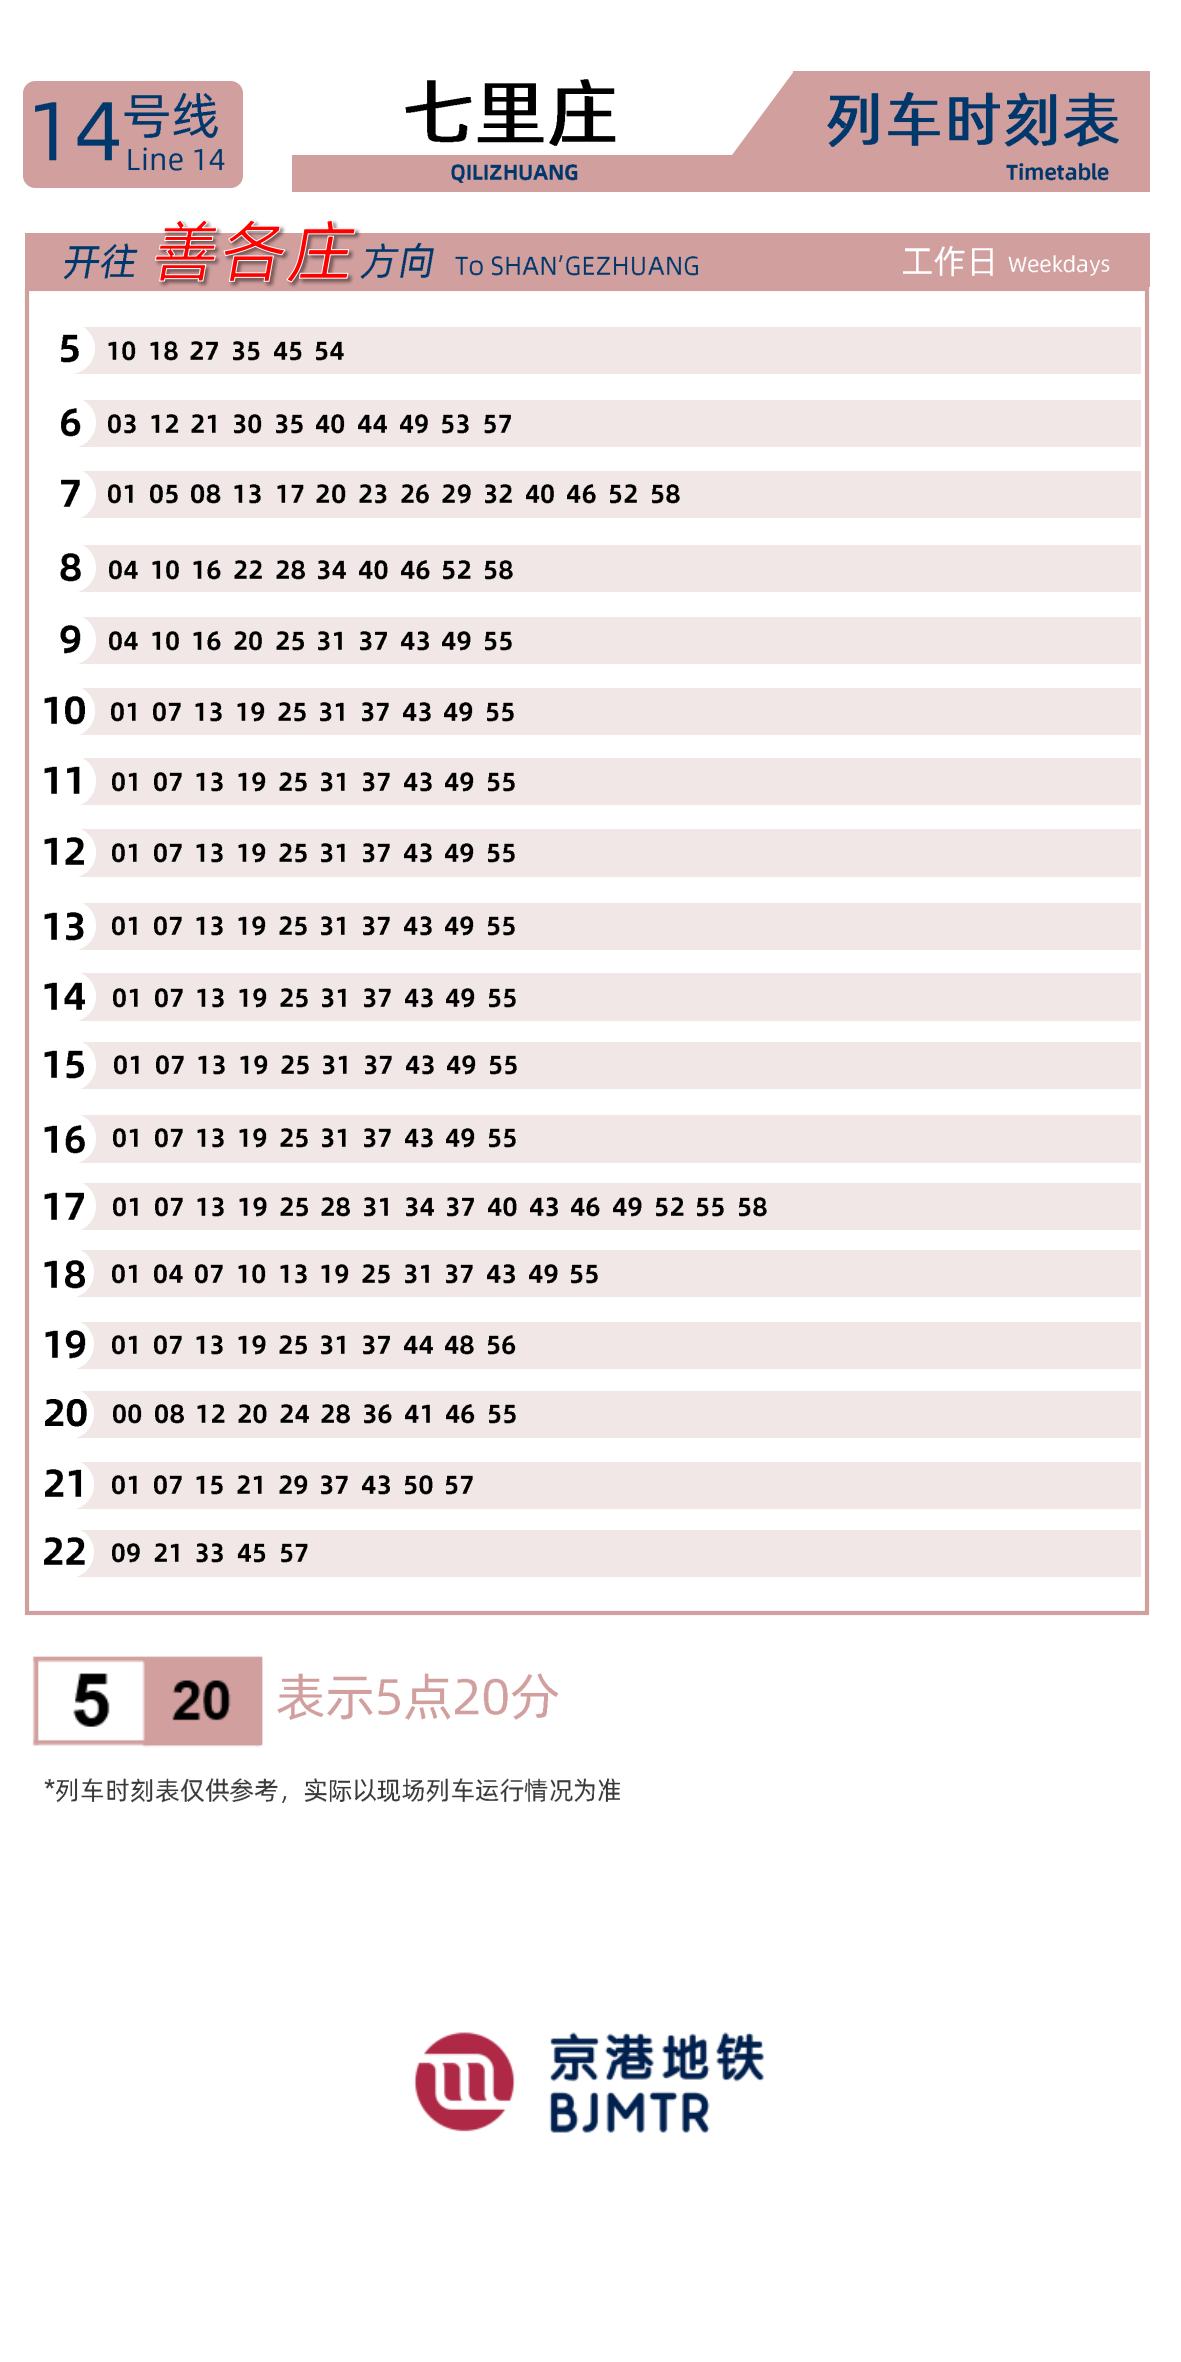 Line 14Qilizhuang时刻表